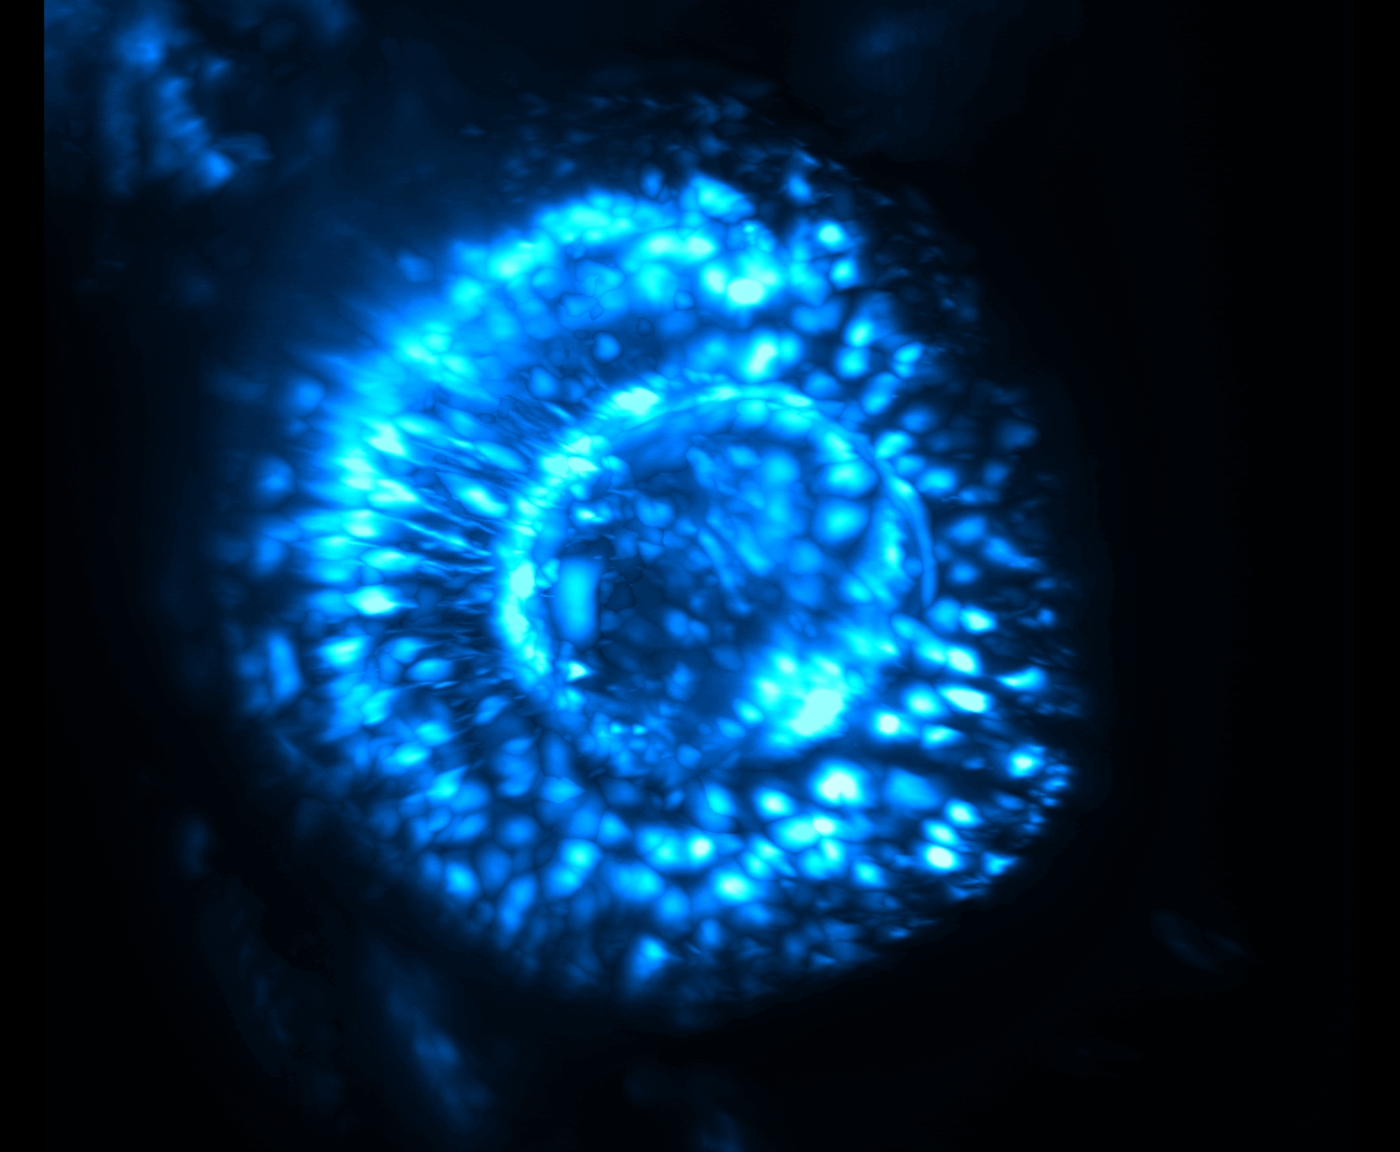 Zebrafish Eye, Light Sheet Imaging, Venus, 3d Rotational View's image